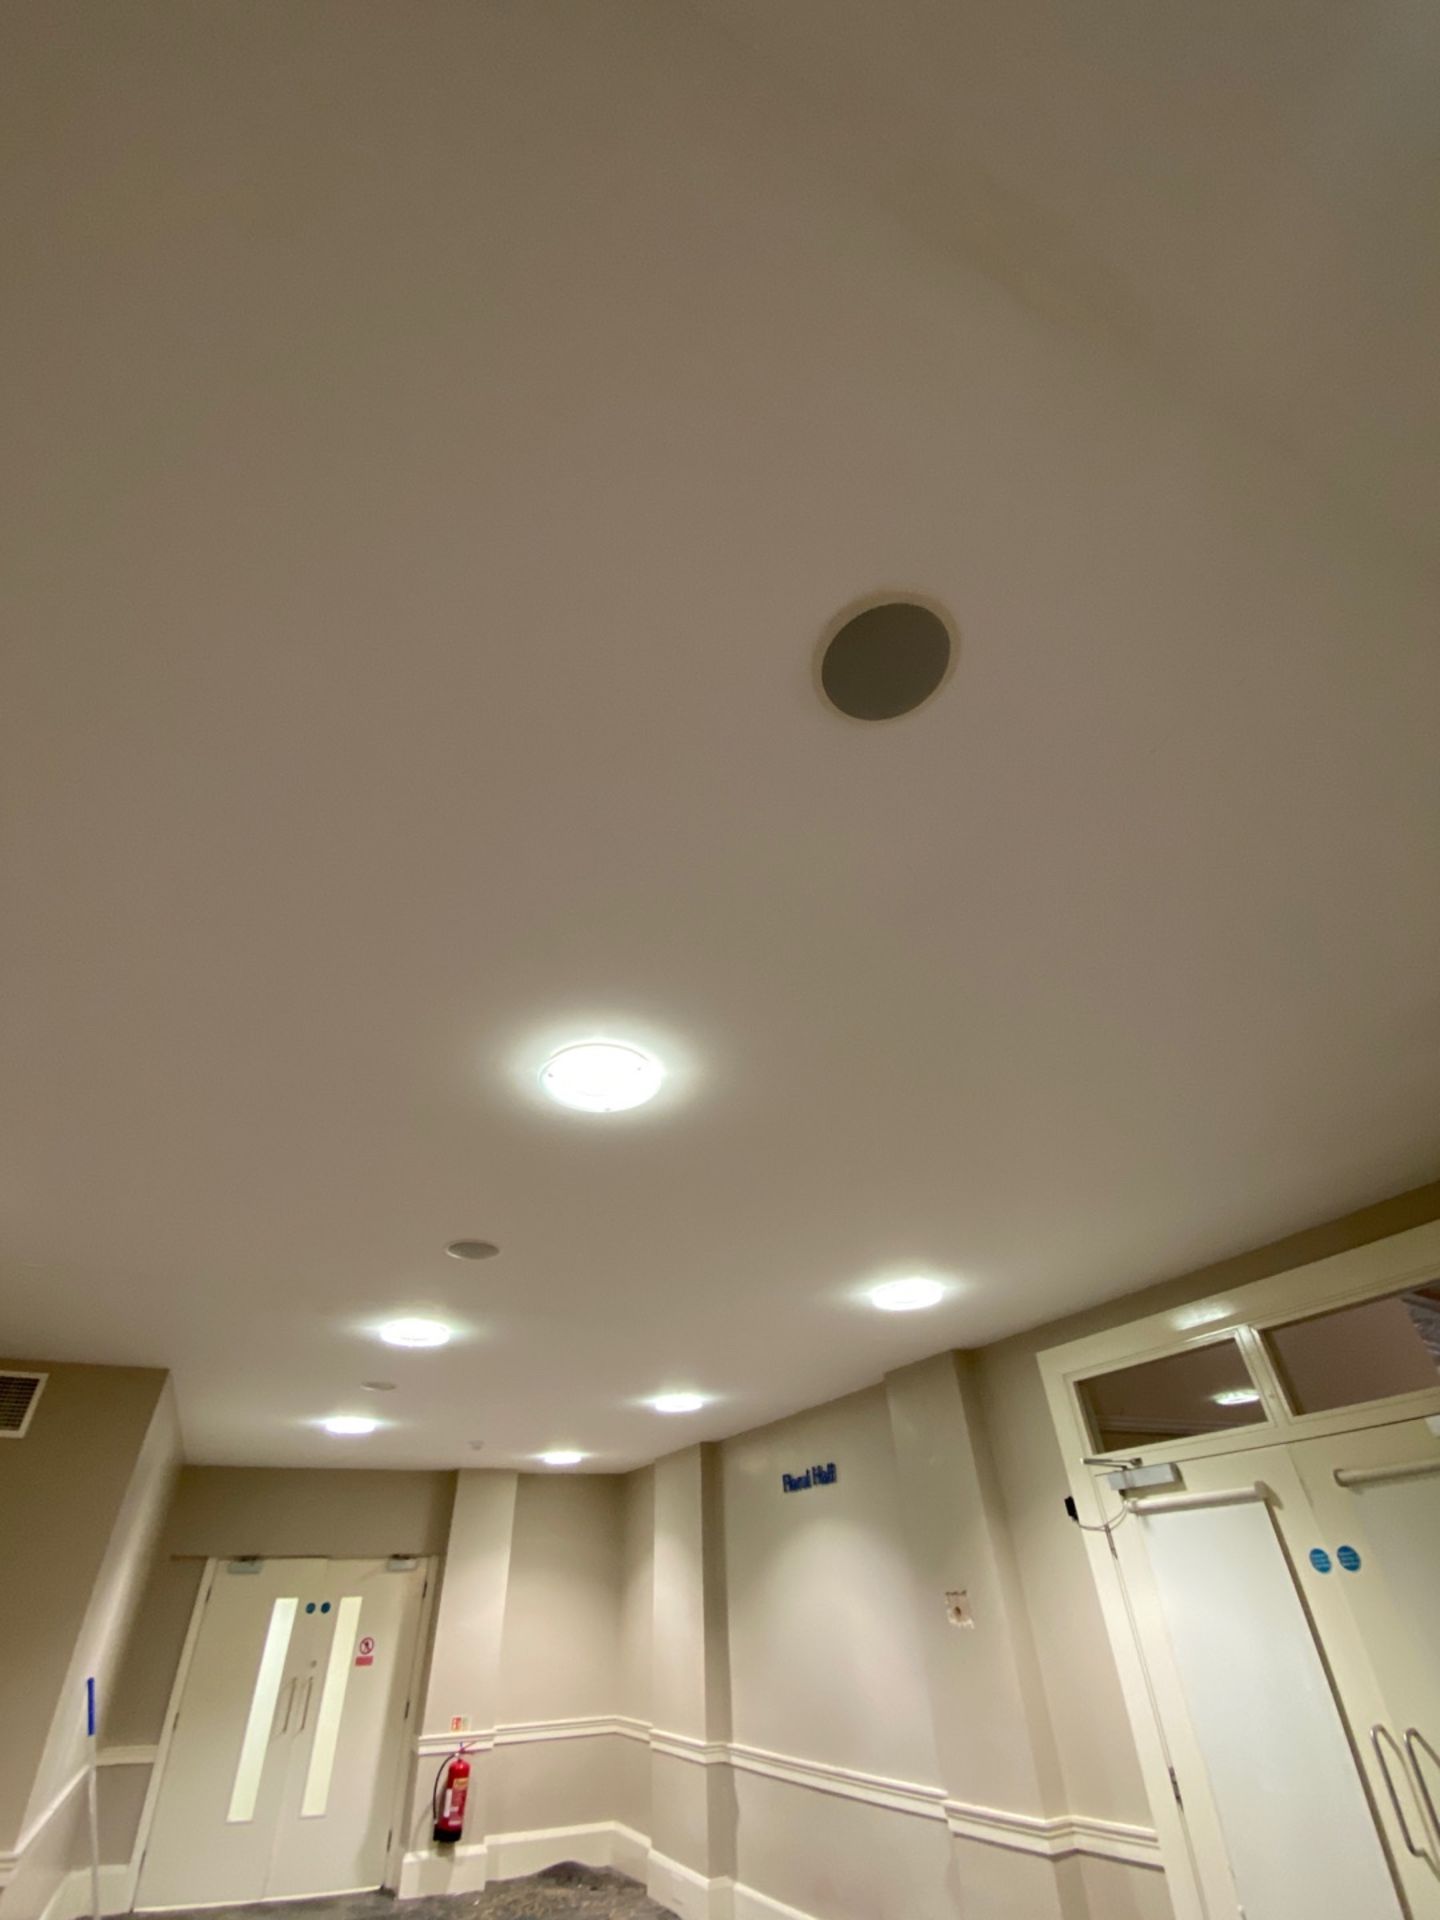 Ceiling Speaker X8 - Image 2 of 3